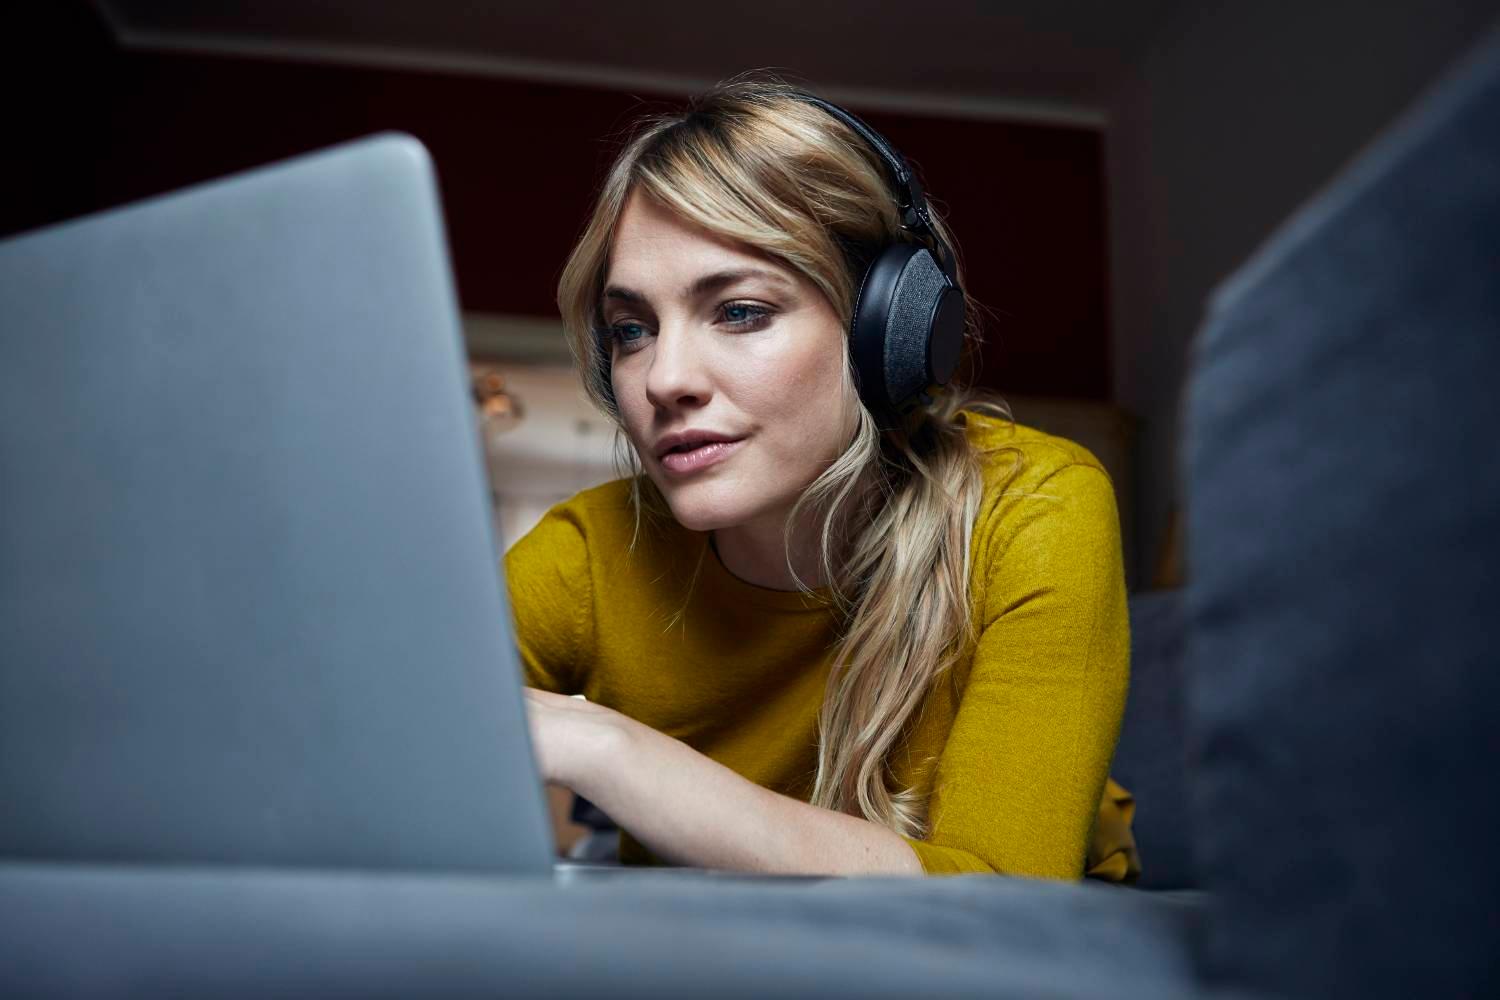 Woman working on laptop using headphones